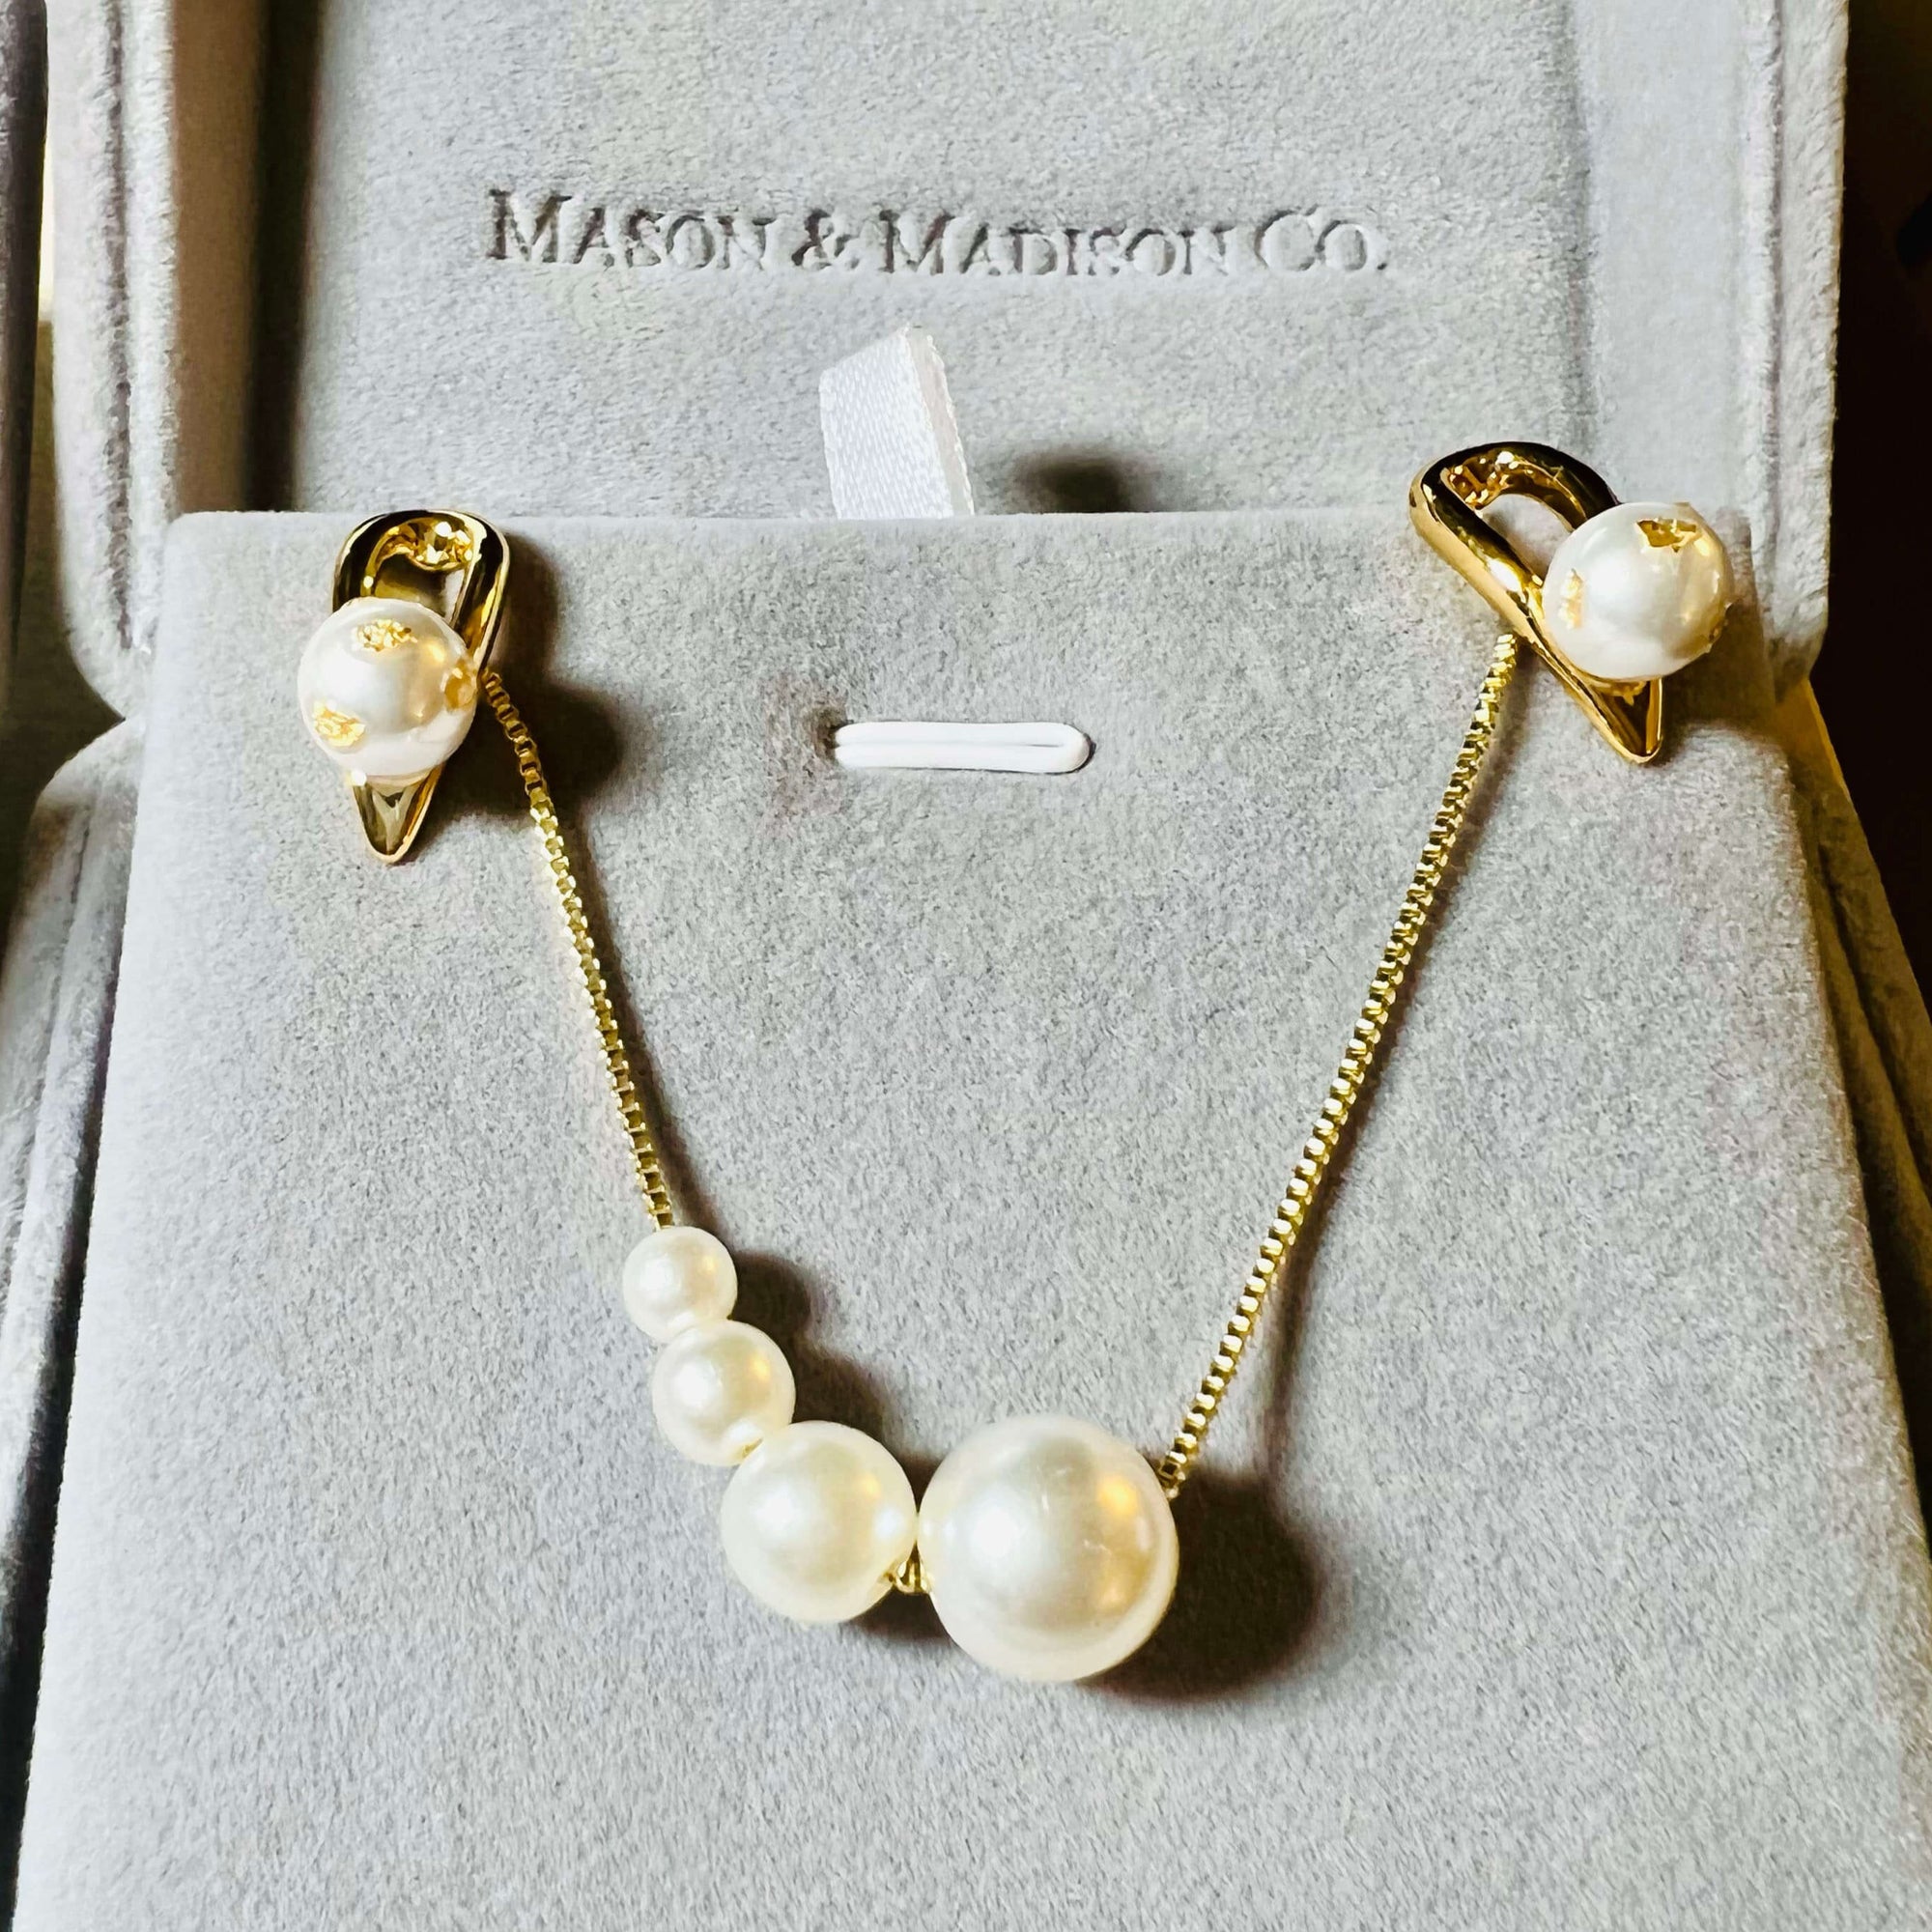 Genuine Premium White Pearl Pendant Necklace